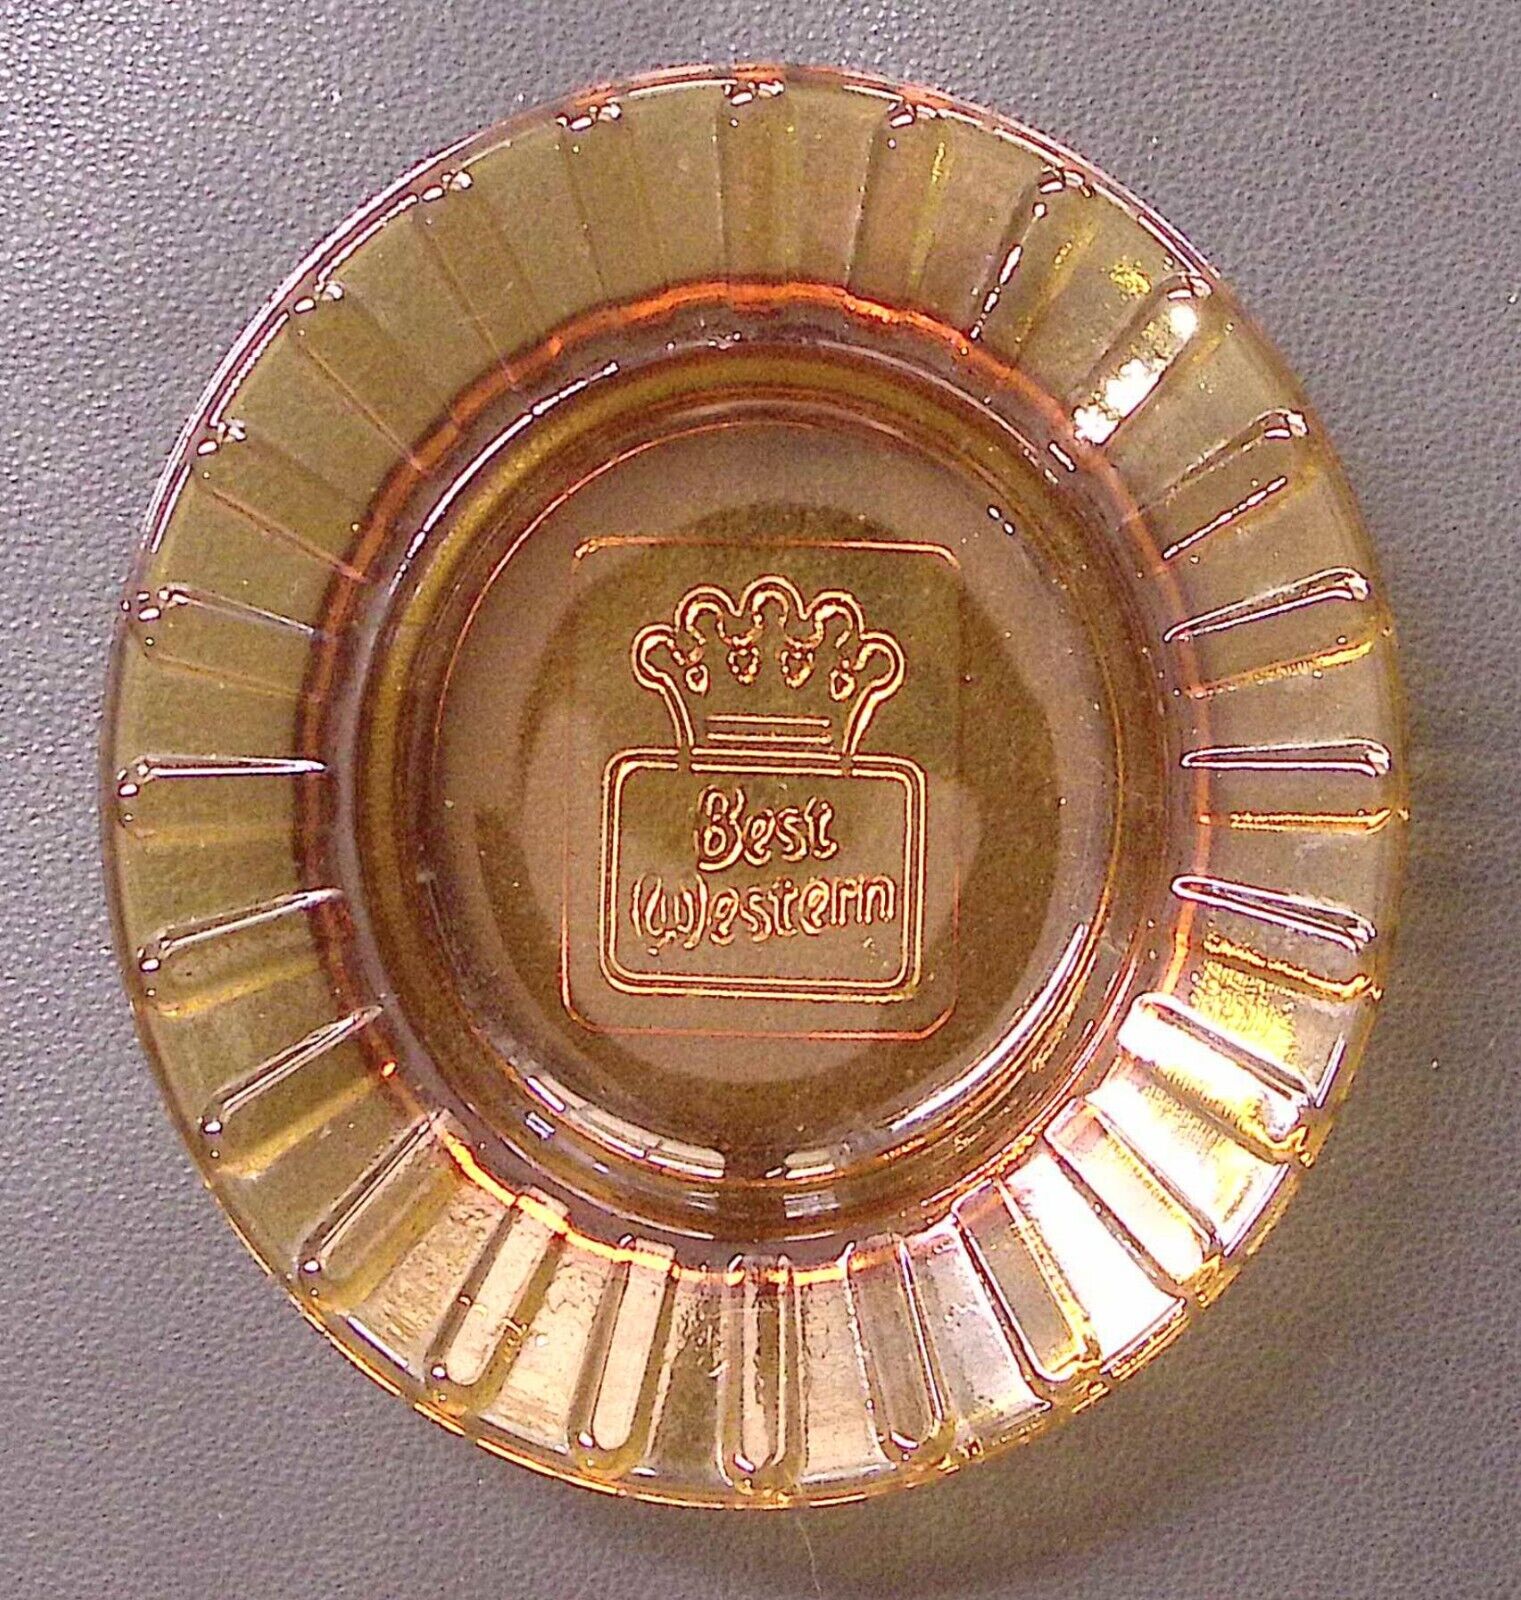 VINTAGE 1970s BEST WESTERN MOTEL ASHTRAY EMBOSSED AMBER GLASS ADVERTISING PROMO